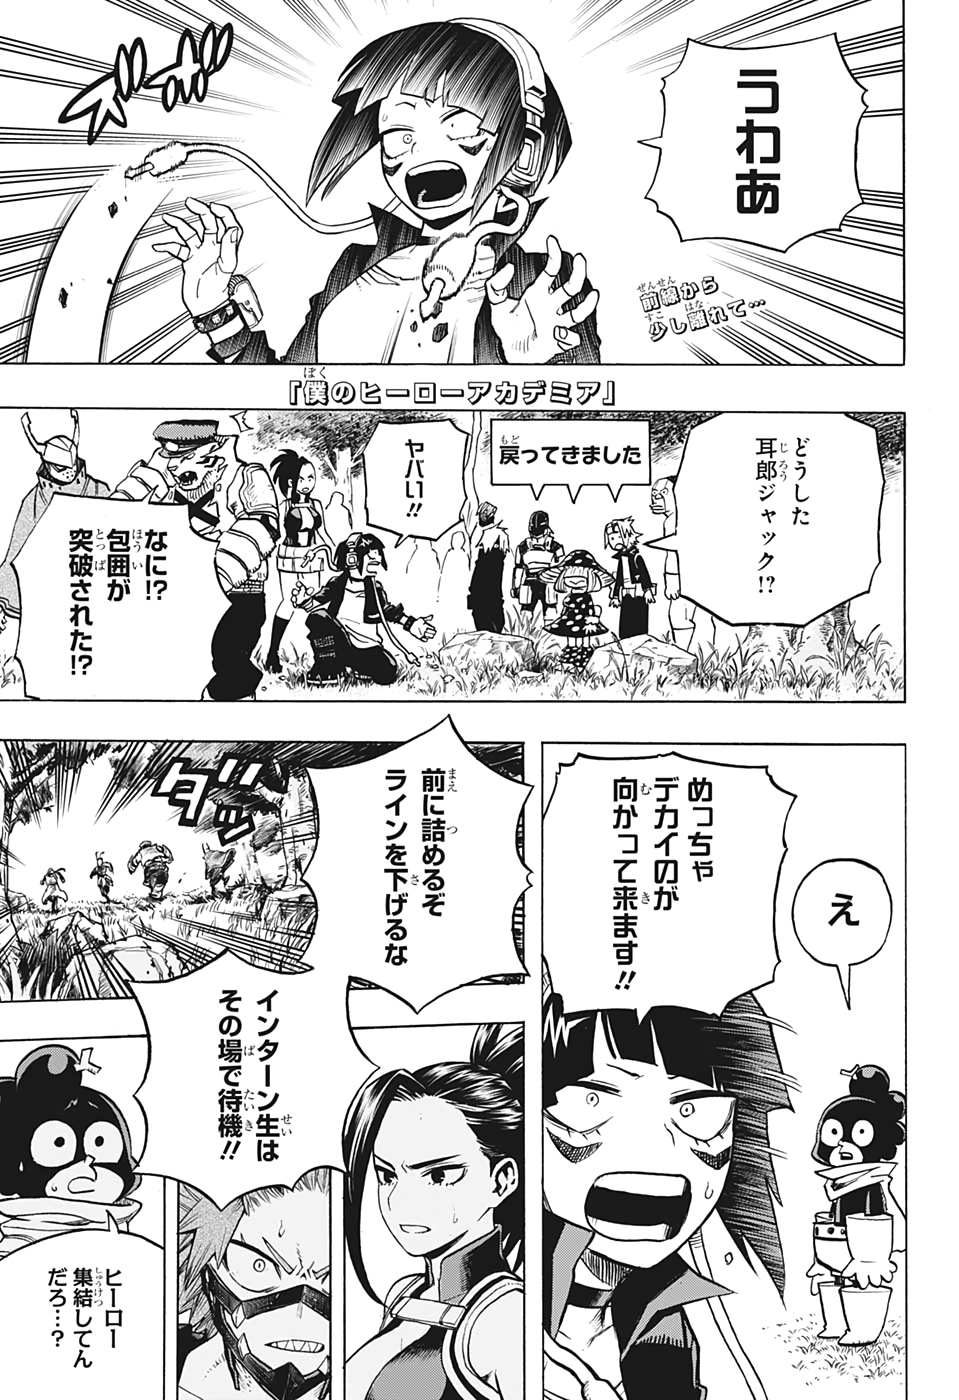 Boku no Hero Academia - Chapter 278 - Page 1